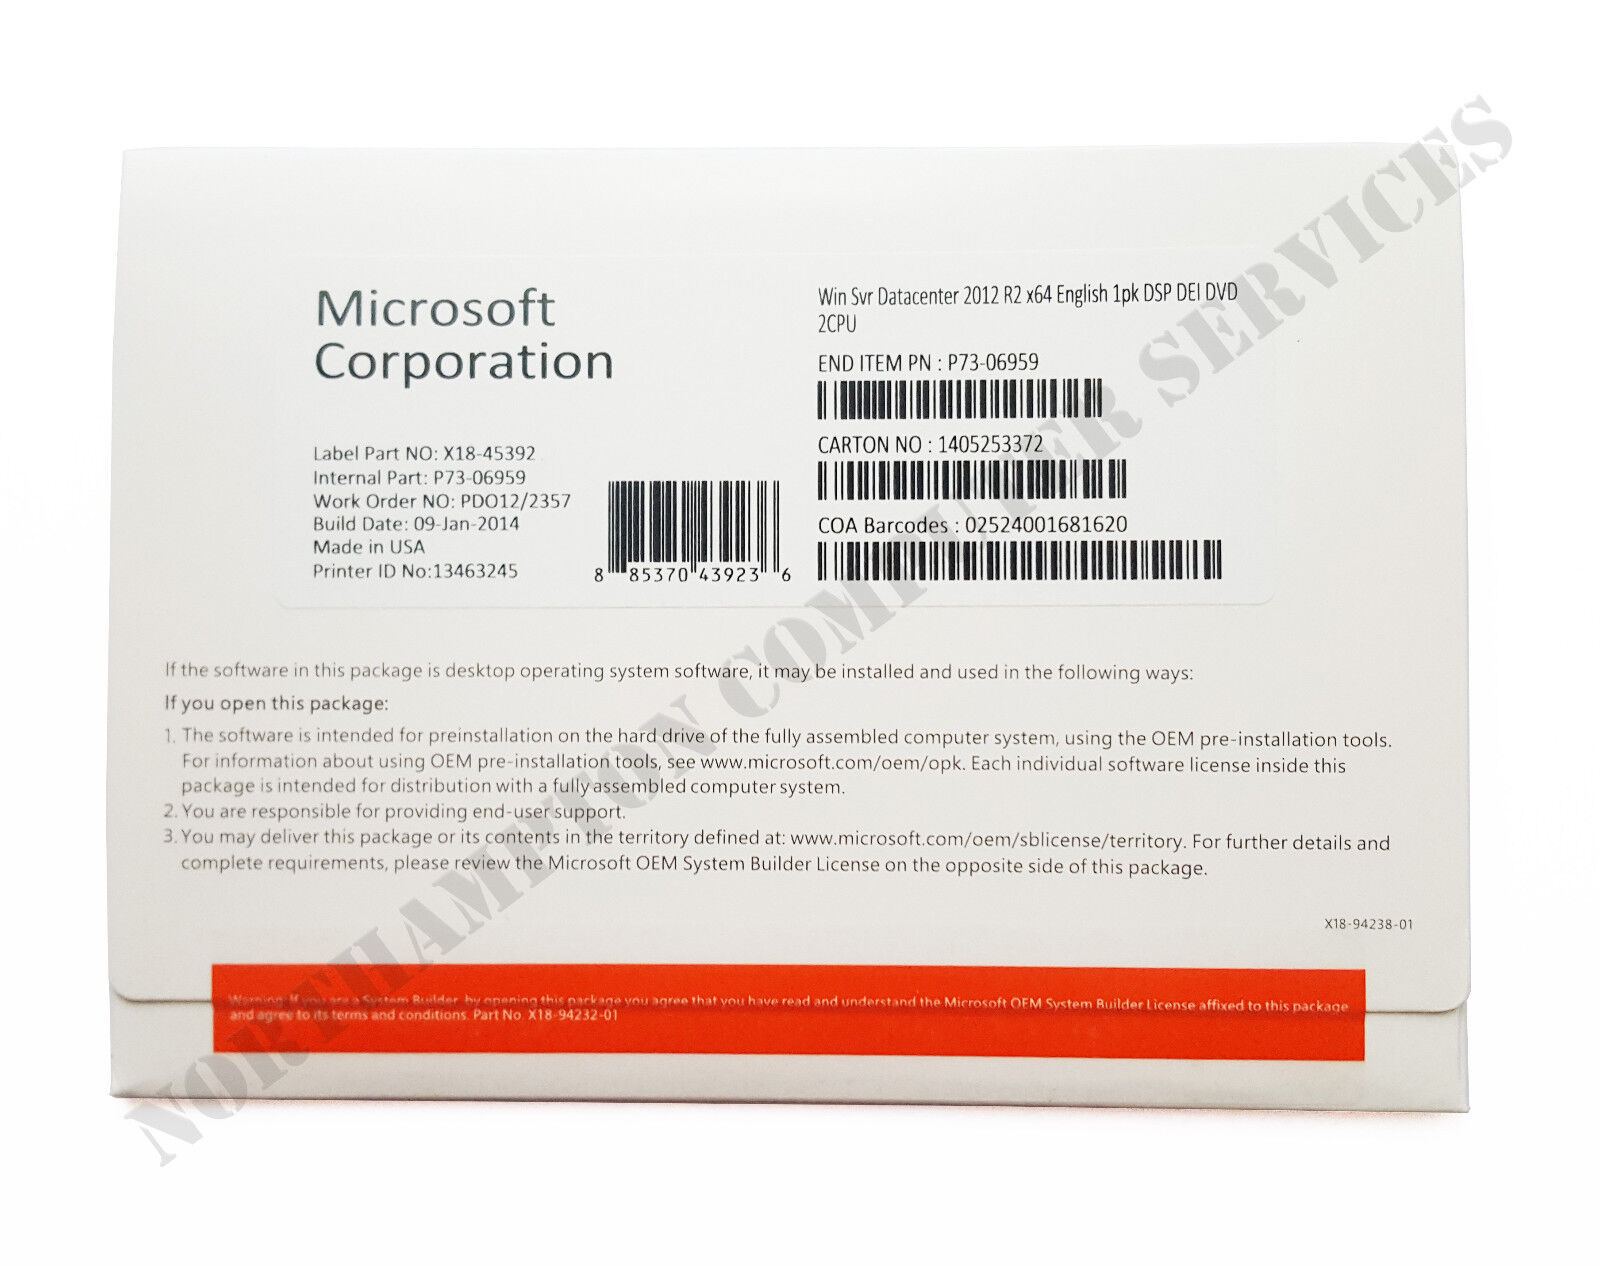 Microsoft Win Server 2012 Datacenter R2 x64 1pk DSP DVD 2CPU P73-06959 - ZEROVAT